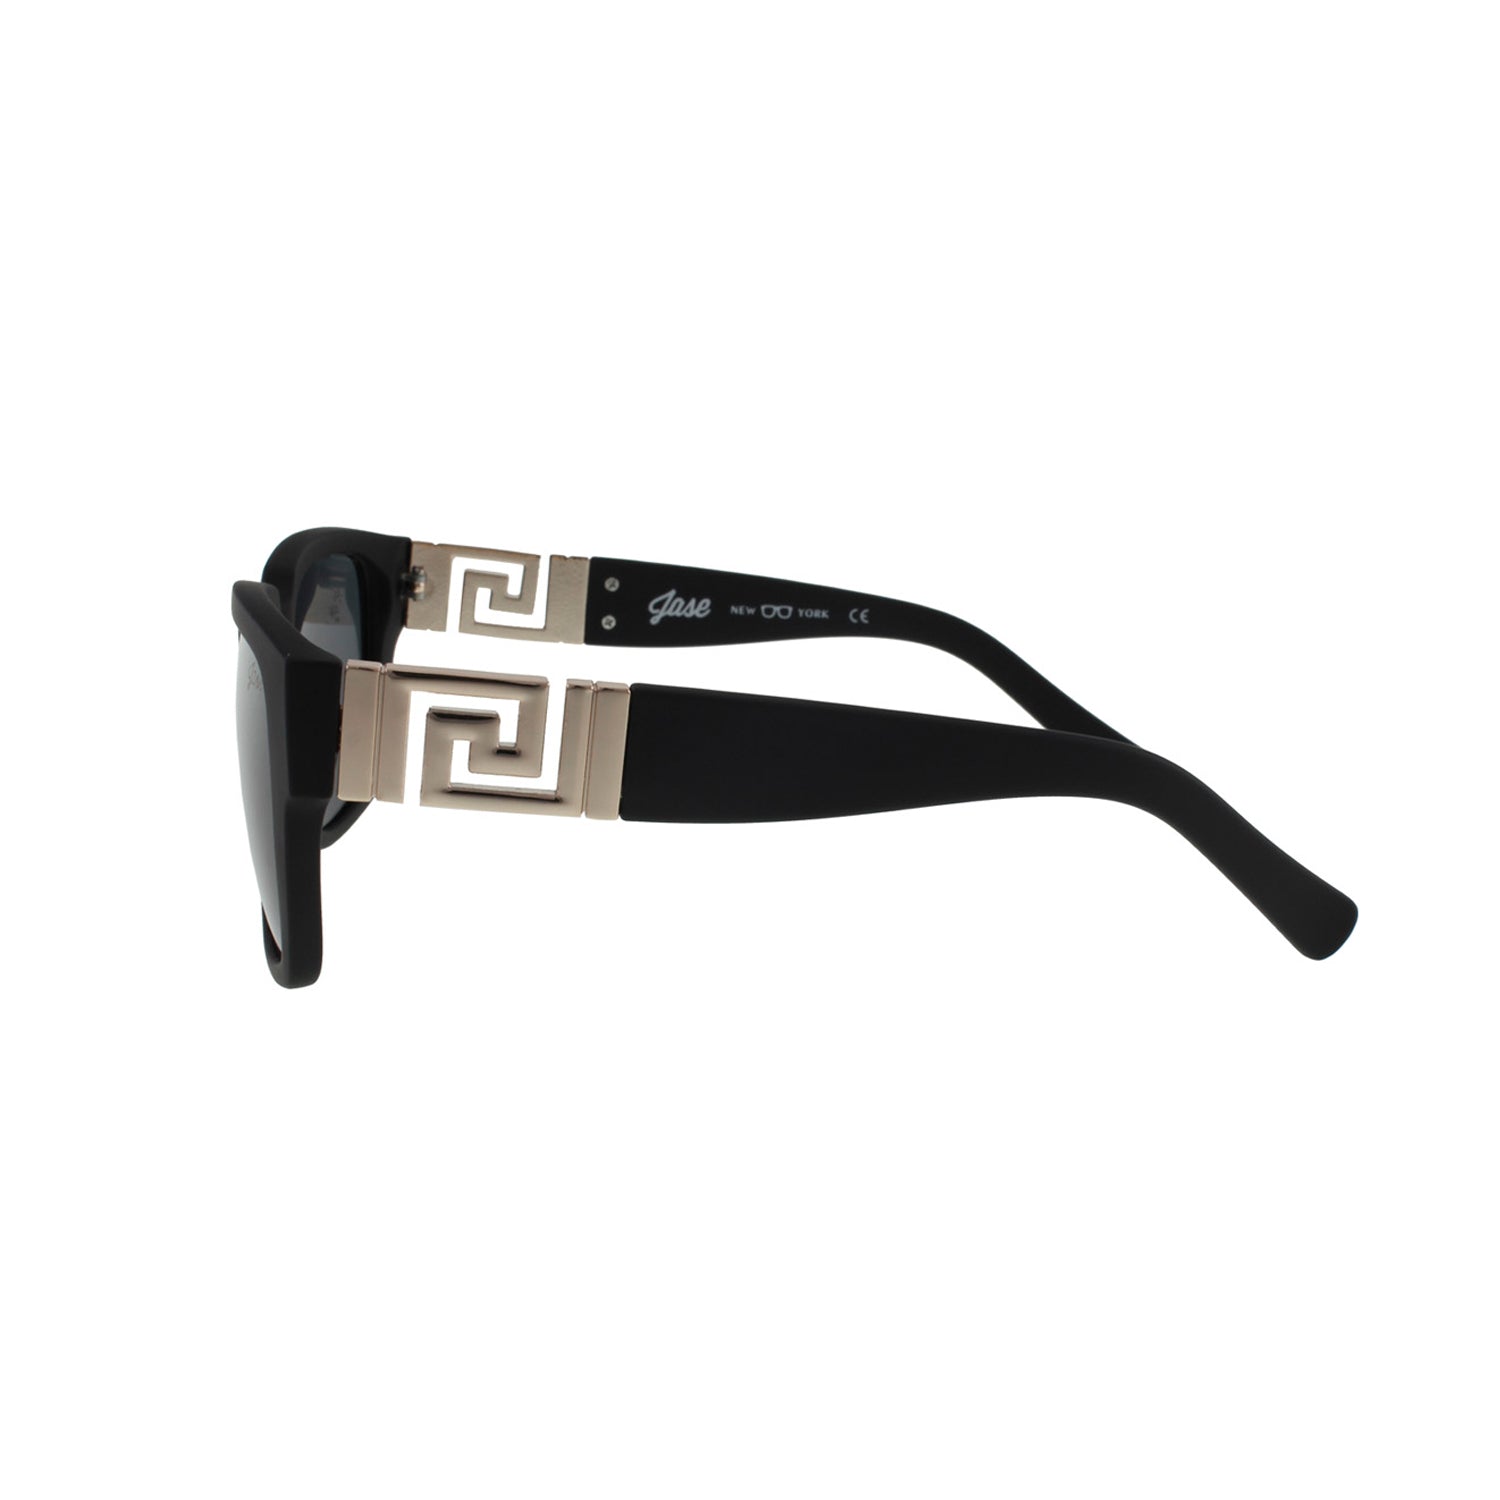 New York Victor Sunglasses - Shop Luxurious57